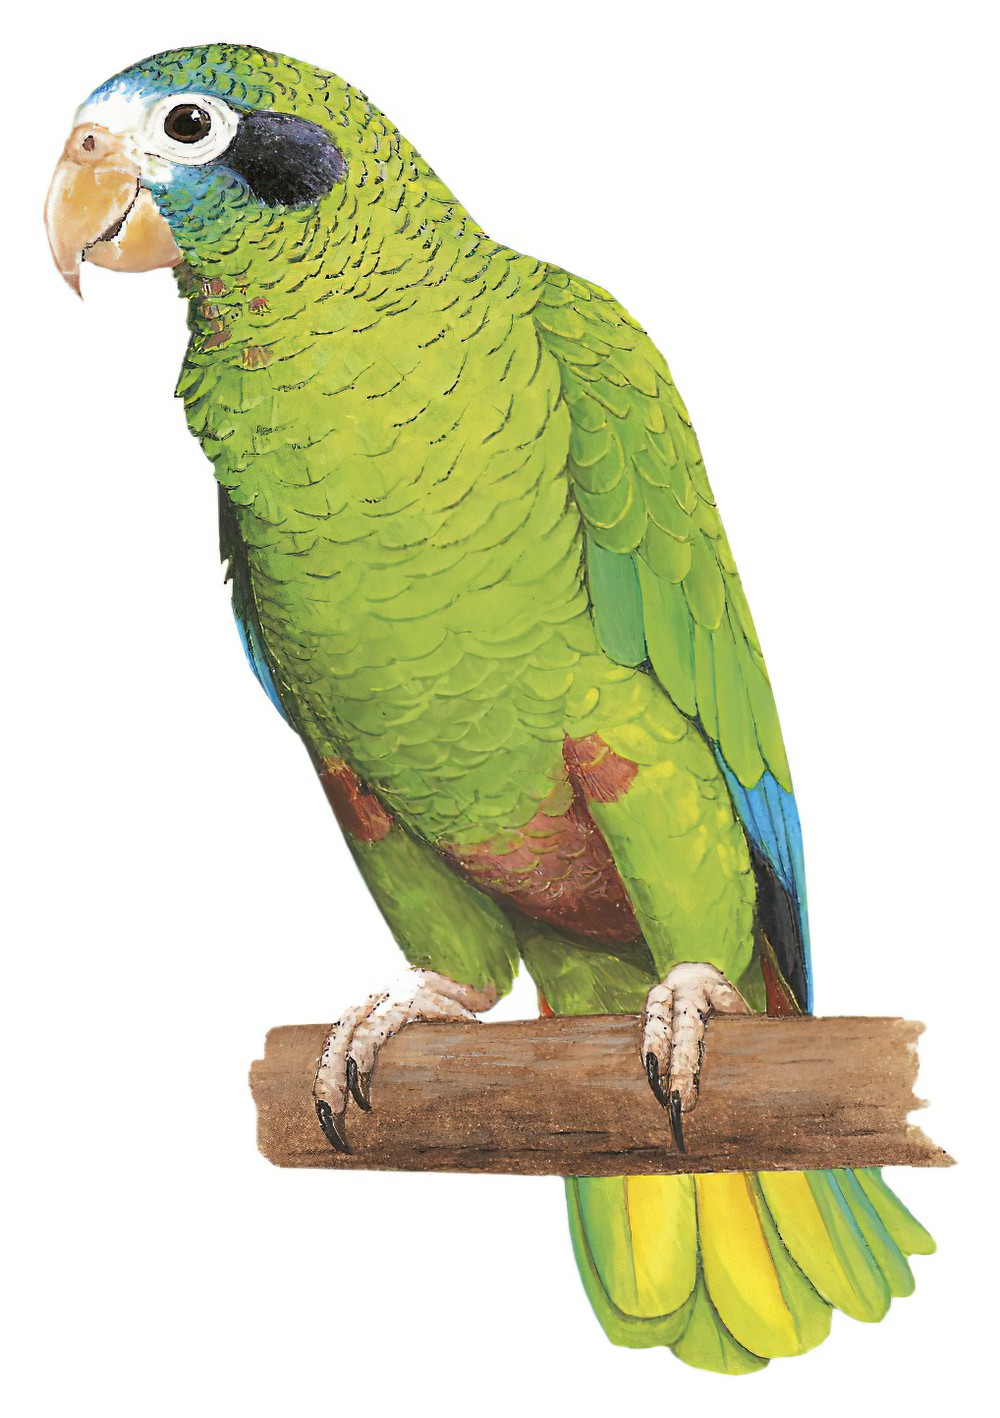 Hispaniolan Parrot / Amazona ventralis